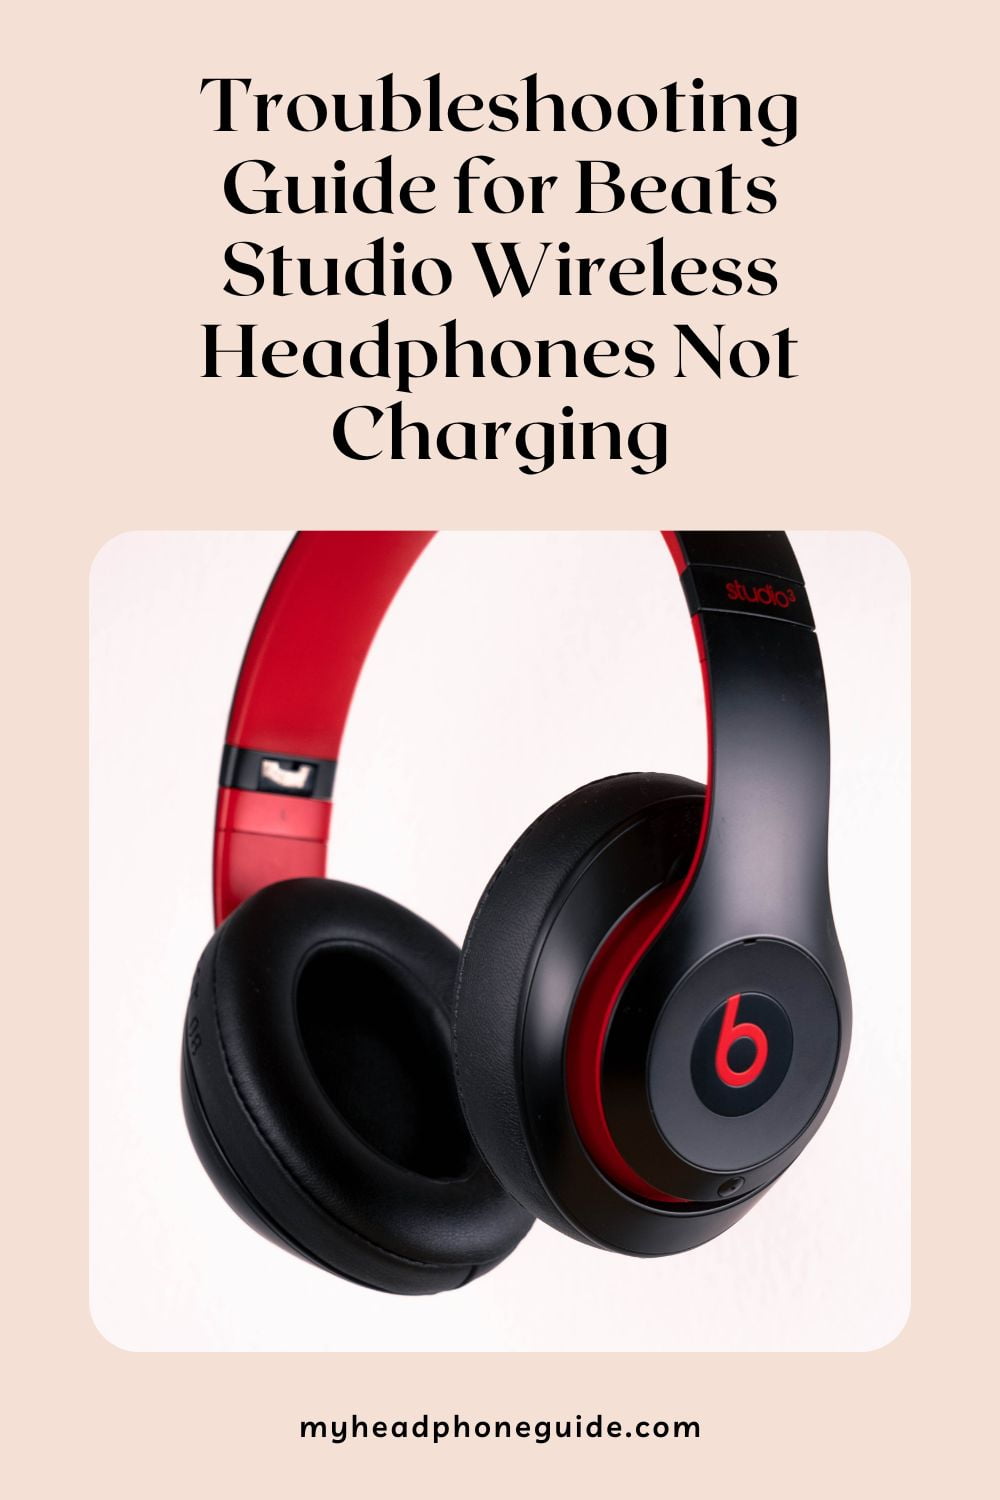 Troubleshooting Guide for Beats Studio Wireless Headphones Not Charging